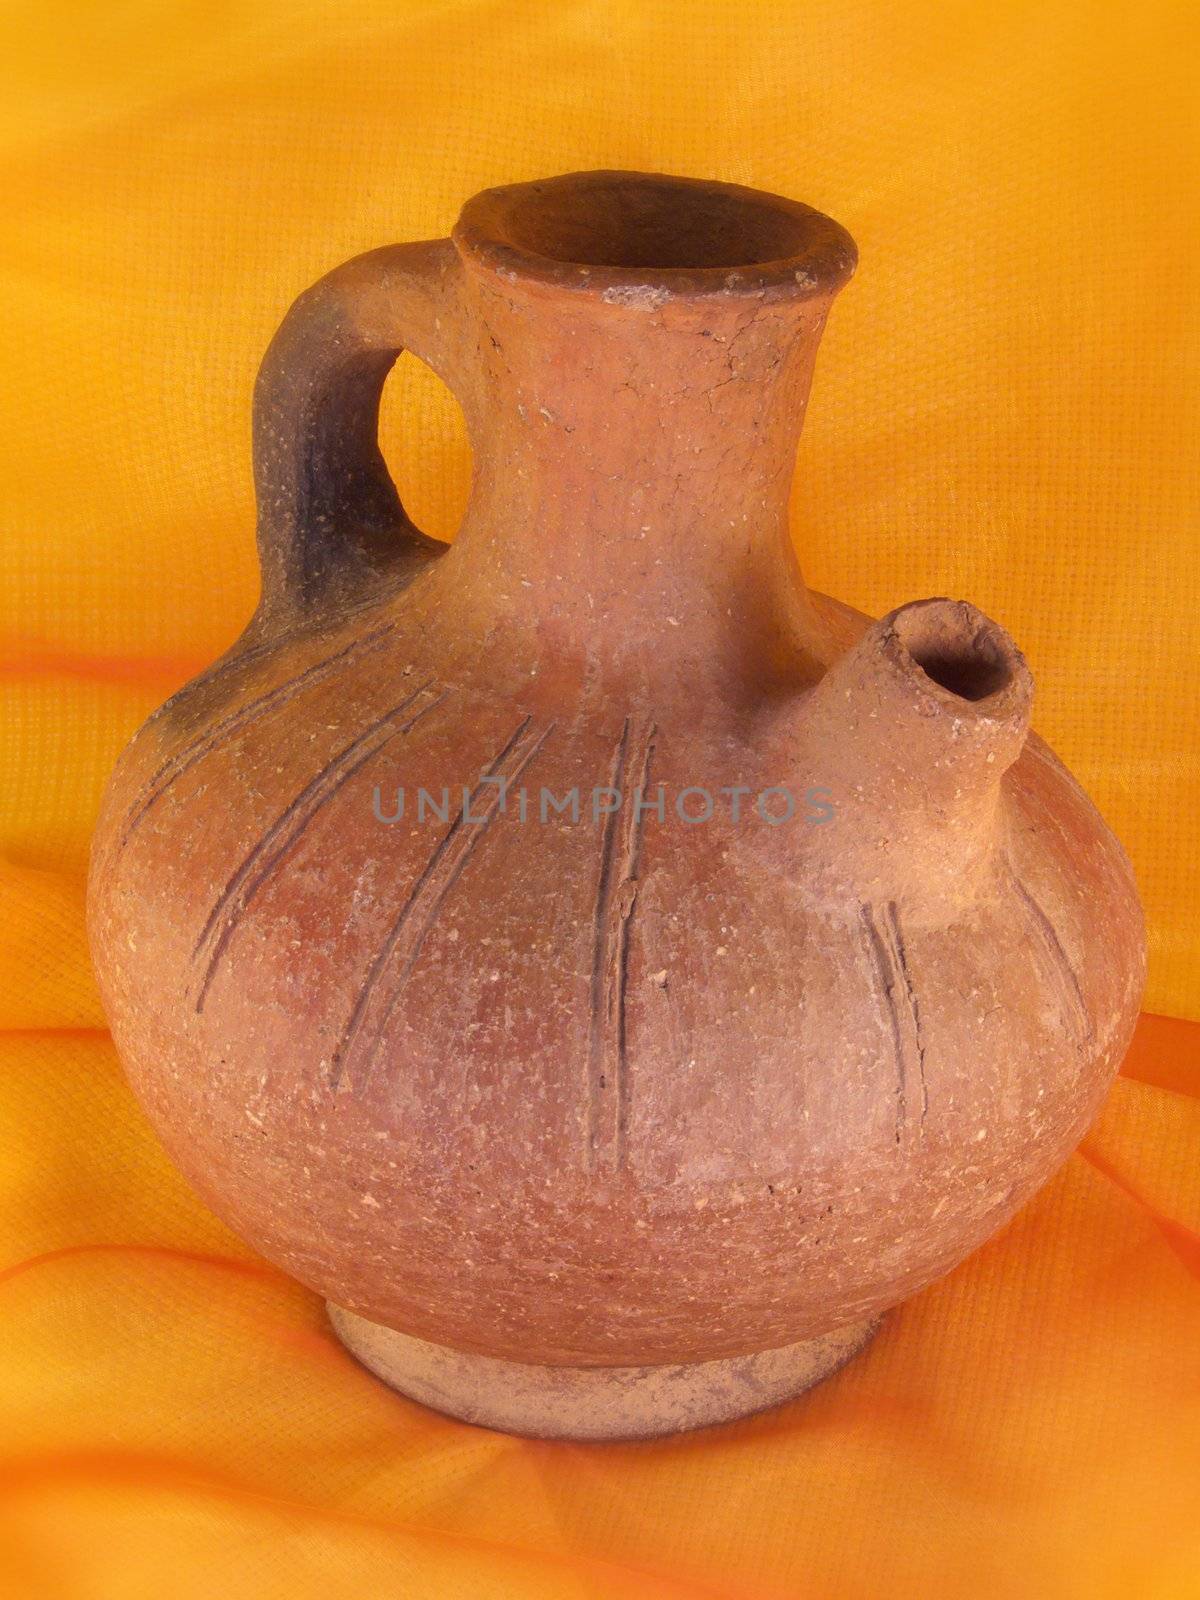 Africa, pottery jug by jbouzou